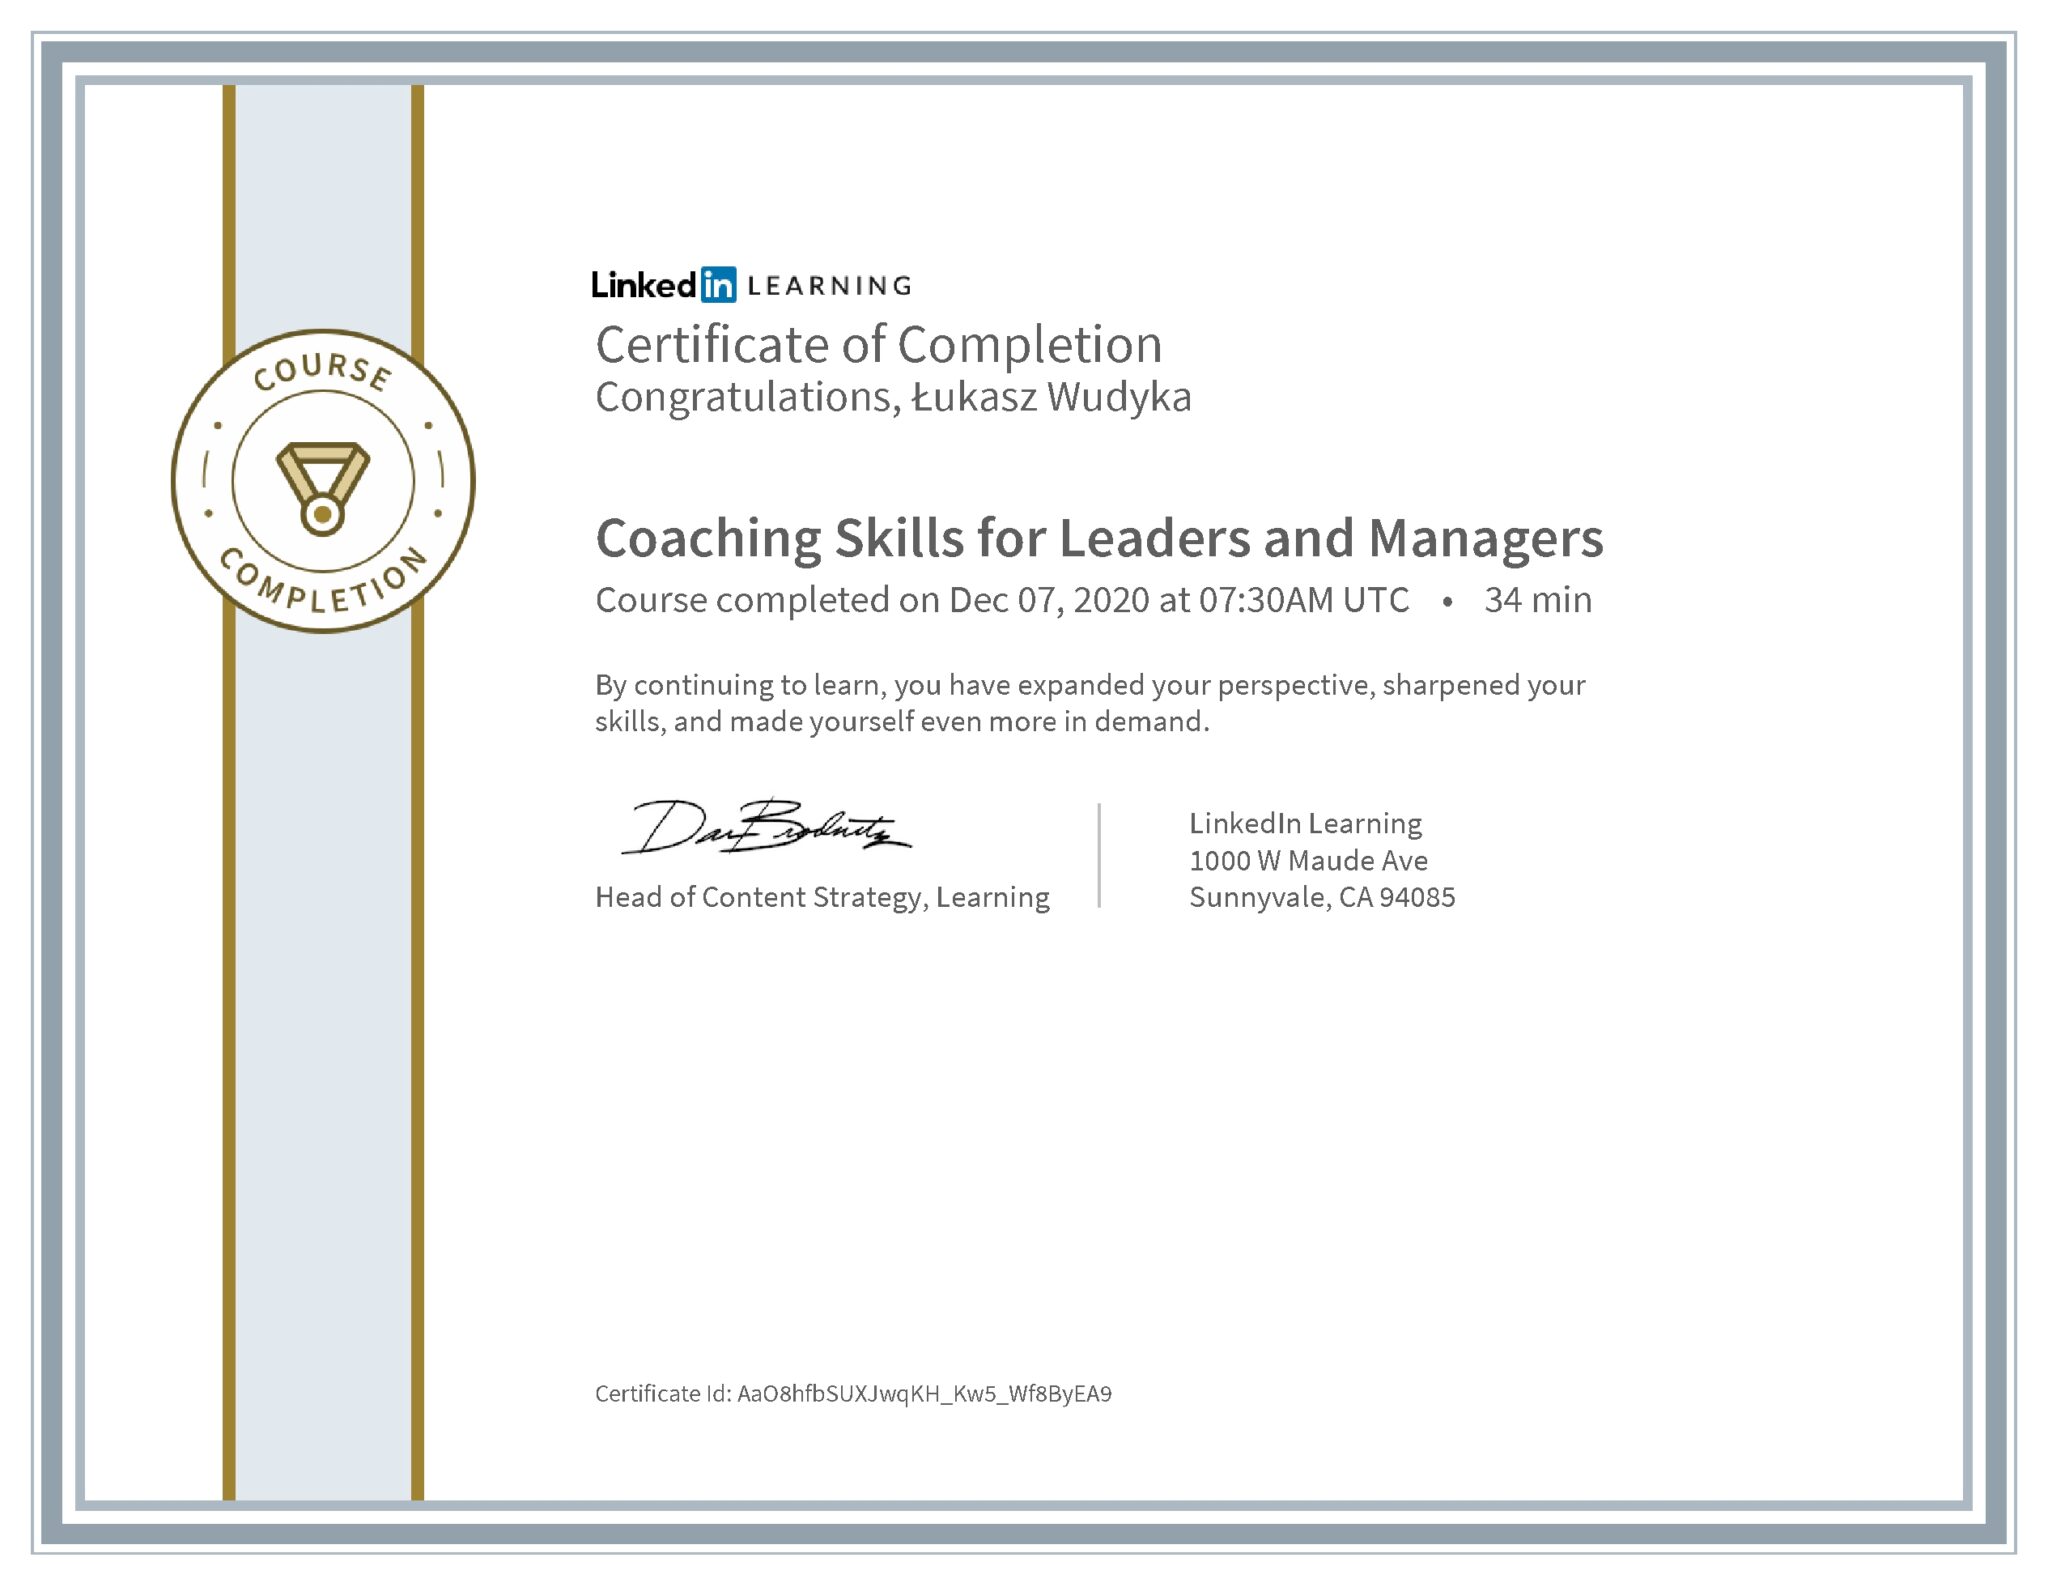 Łukasz Wudyka certyfikat LinkedIn Coaching Skills for Leaders and Managers